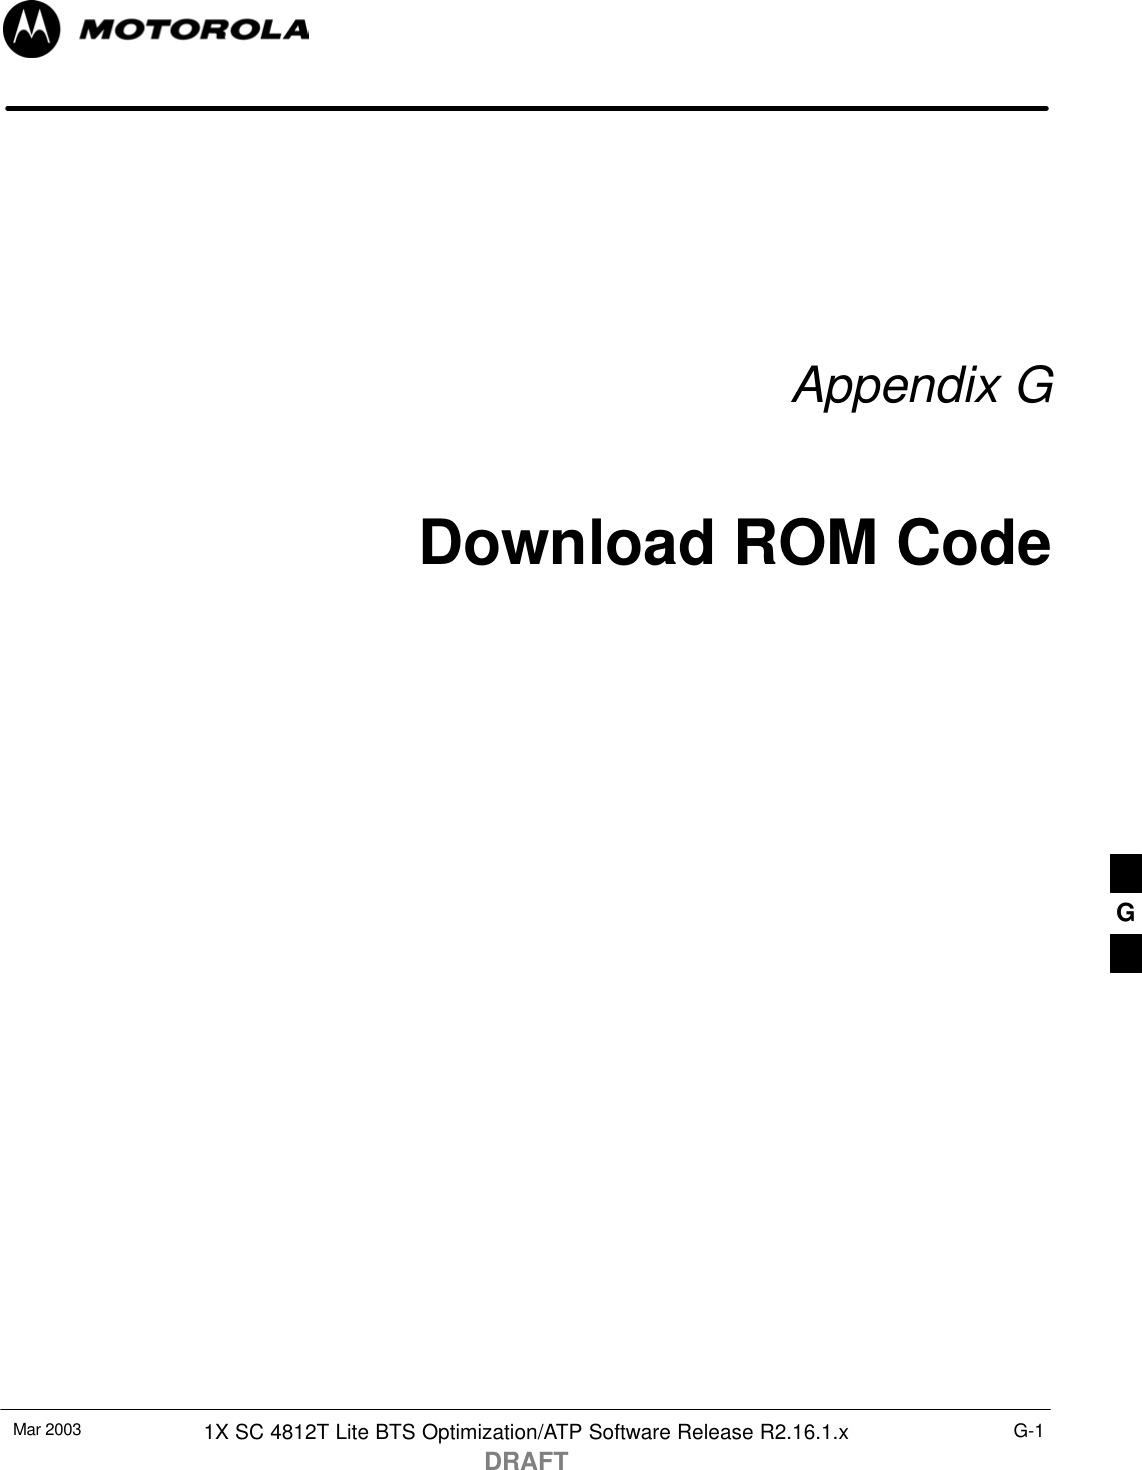 Mar 2003 1X SC 4812T Lite BTS Optimization/ATP Software Release R2.16.1.xDRAFTG-1Appendix GDownload ROM CodeG